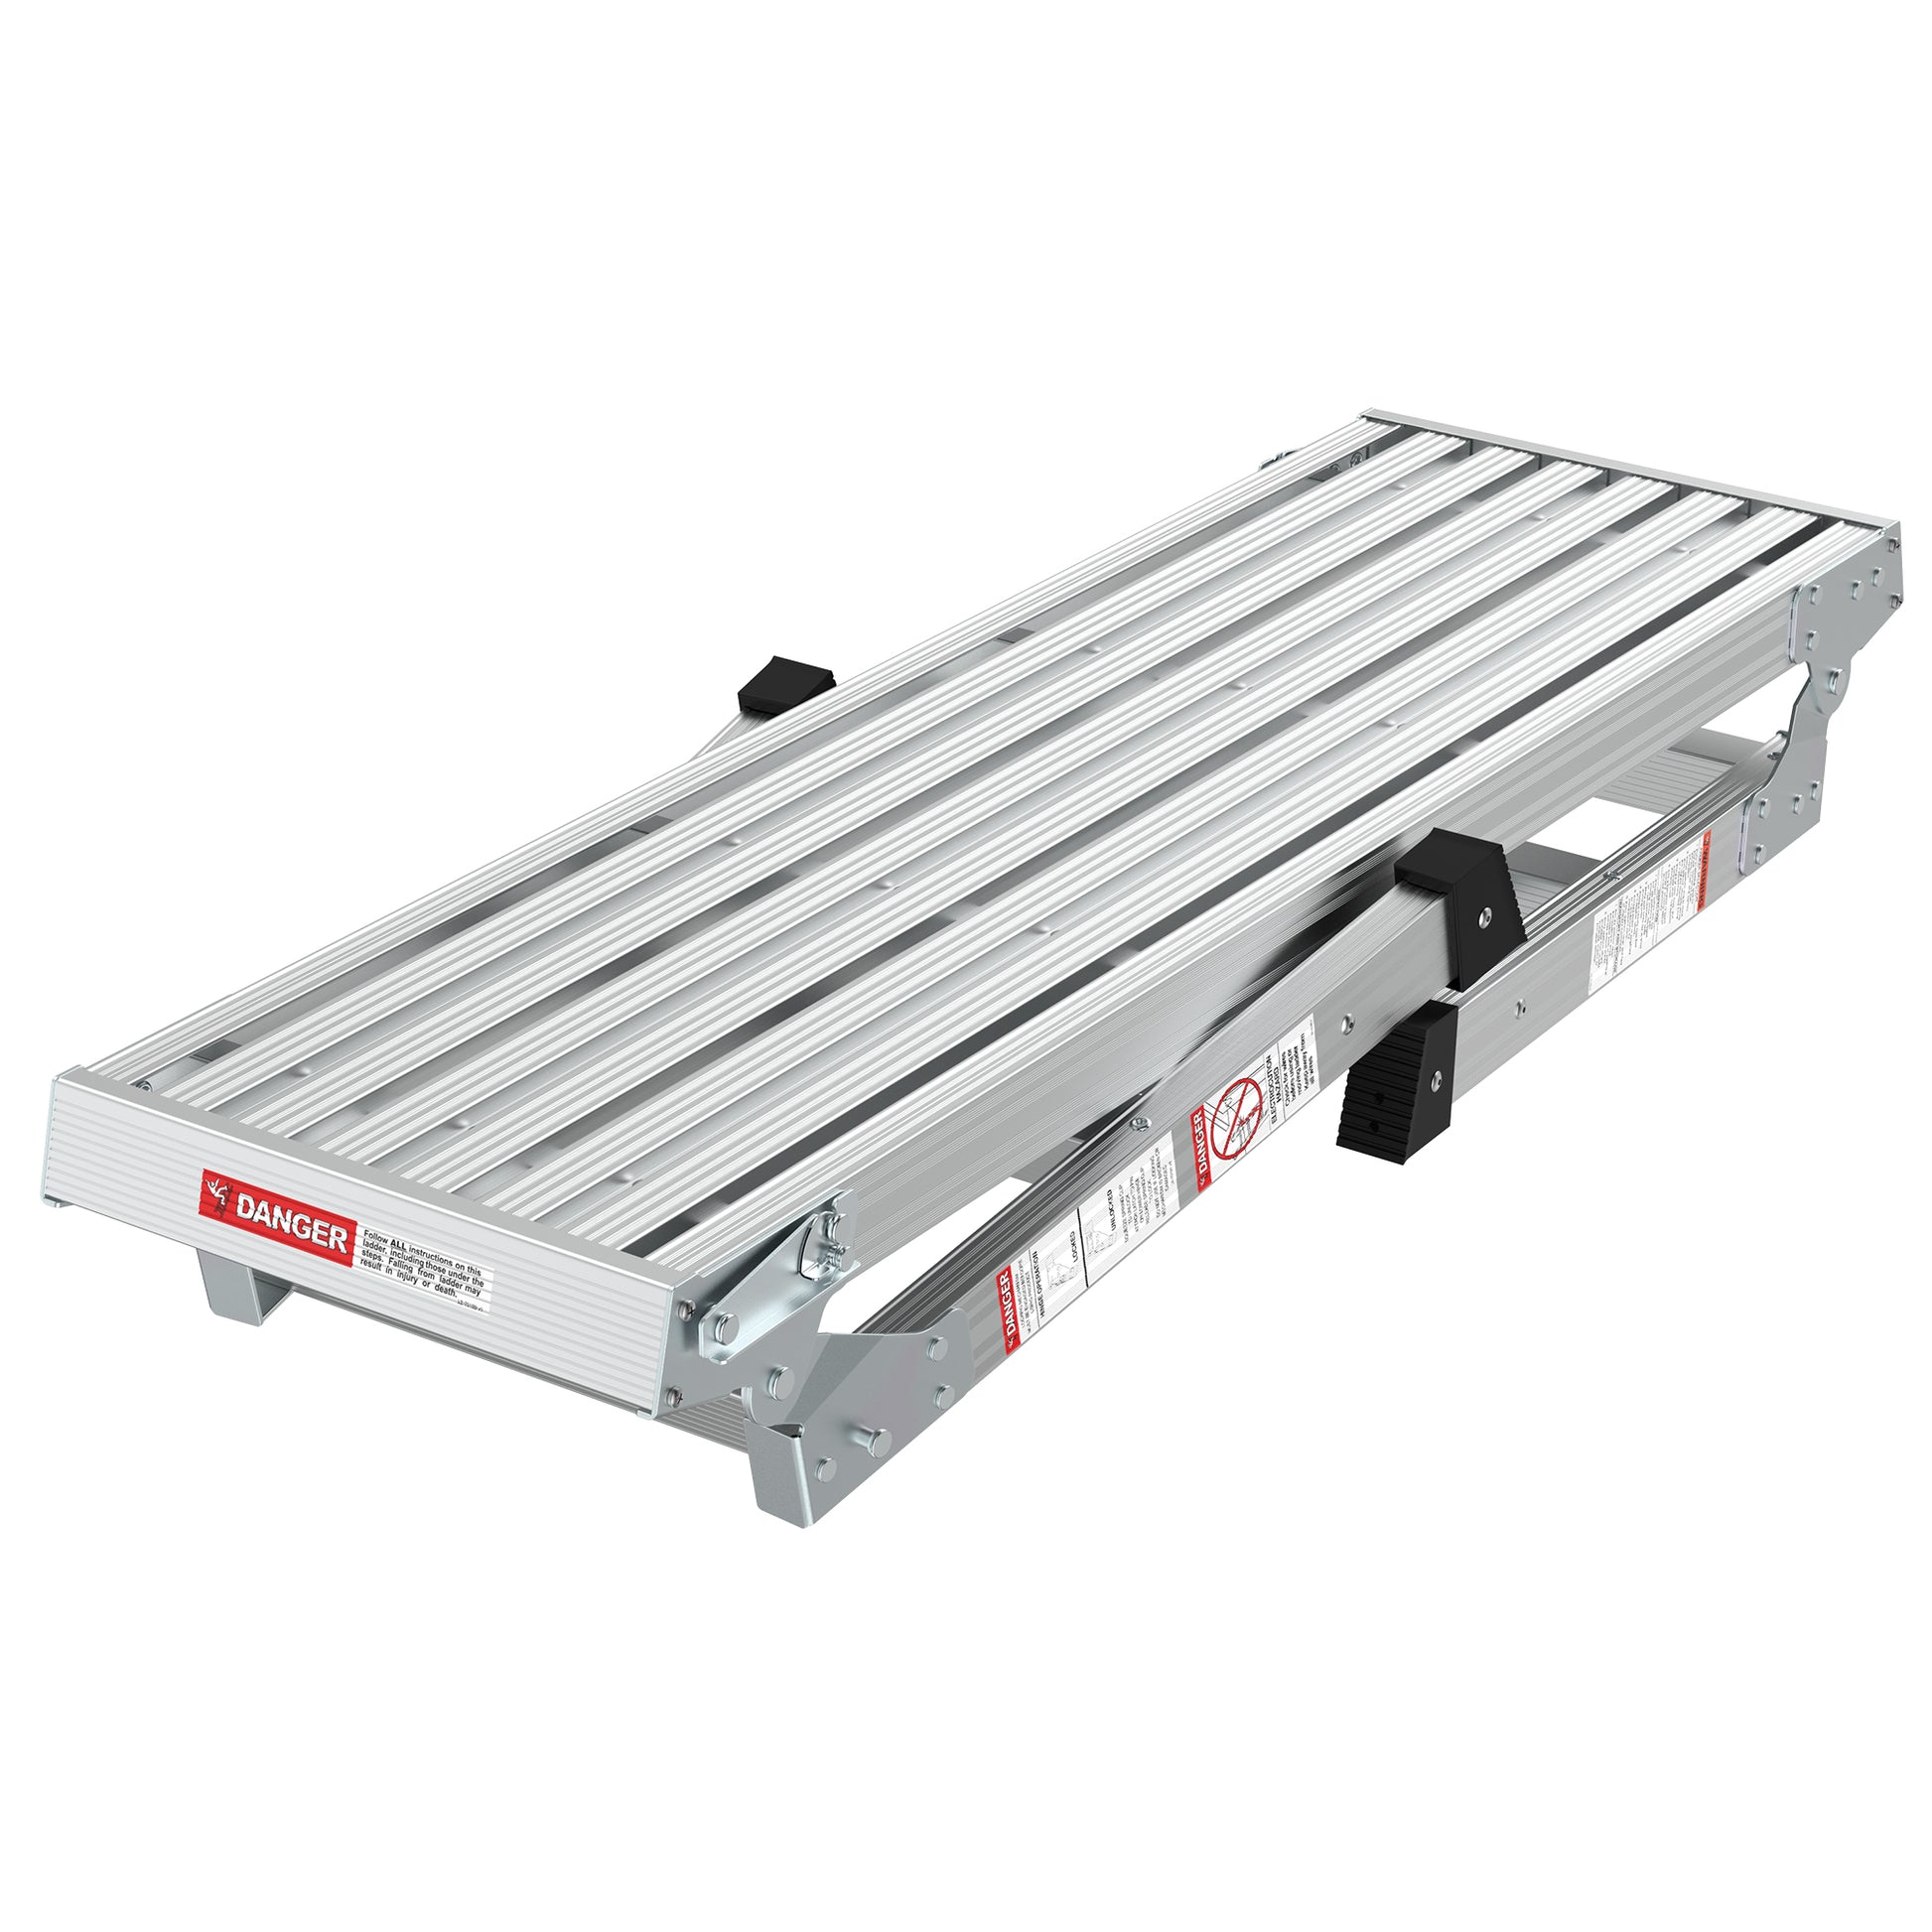 Work Platform Aluminum Step Ladder Drywall Safe